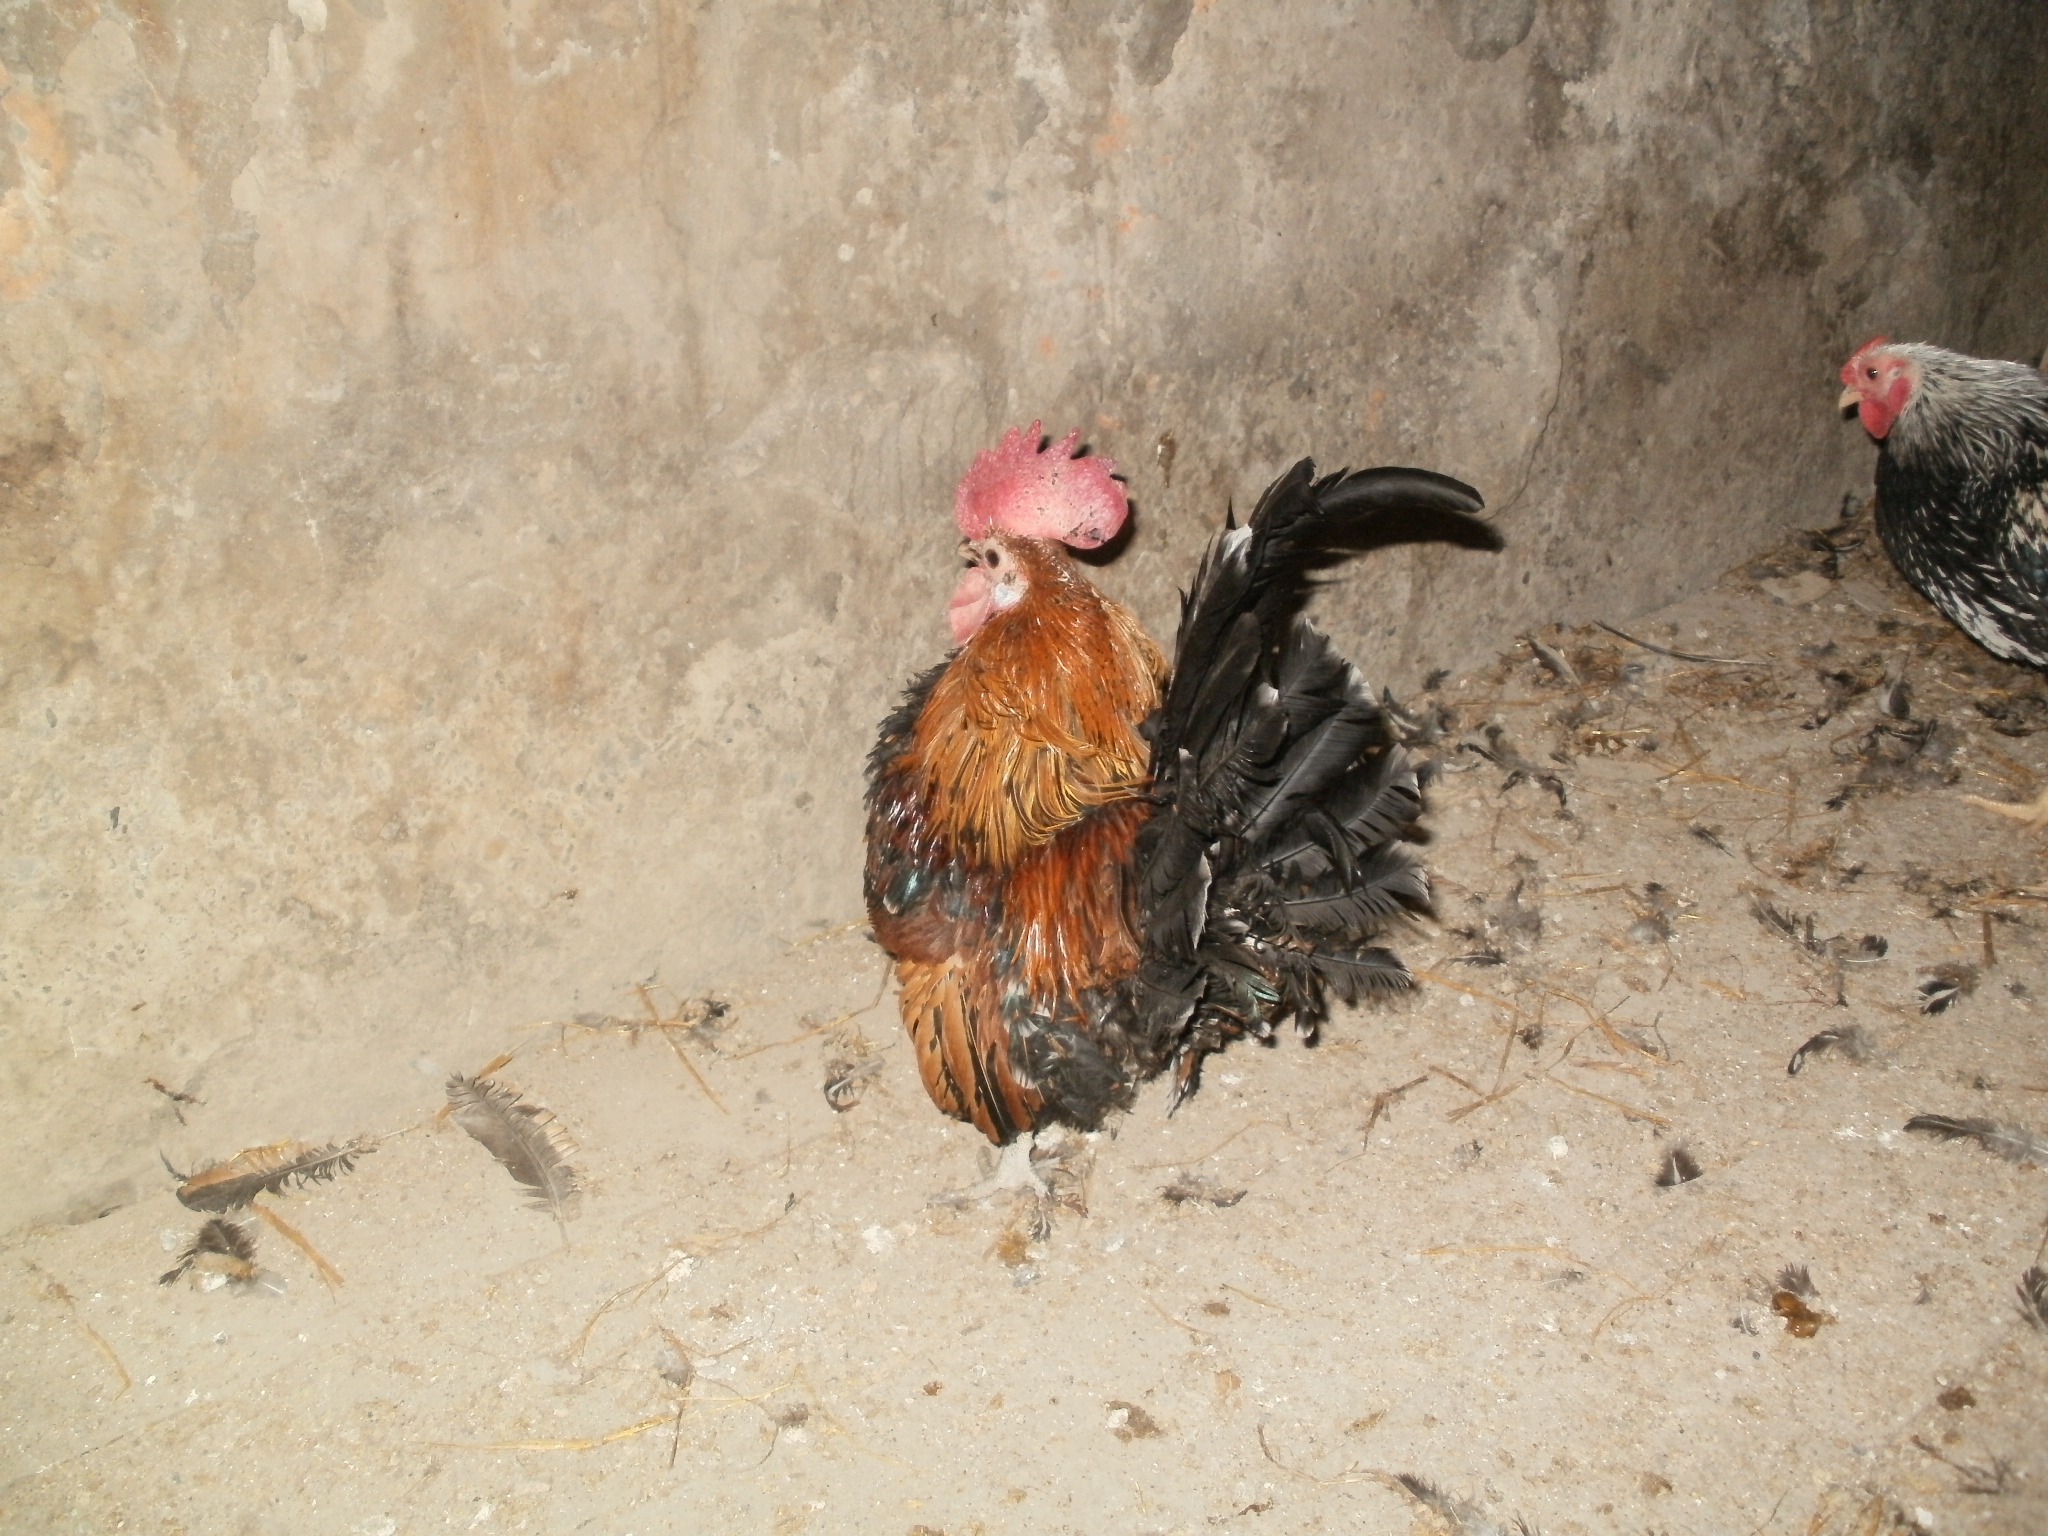 Египетская Файоуми порода кур – описание с фото и видео